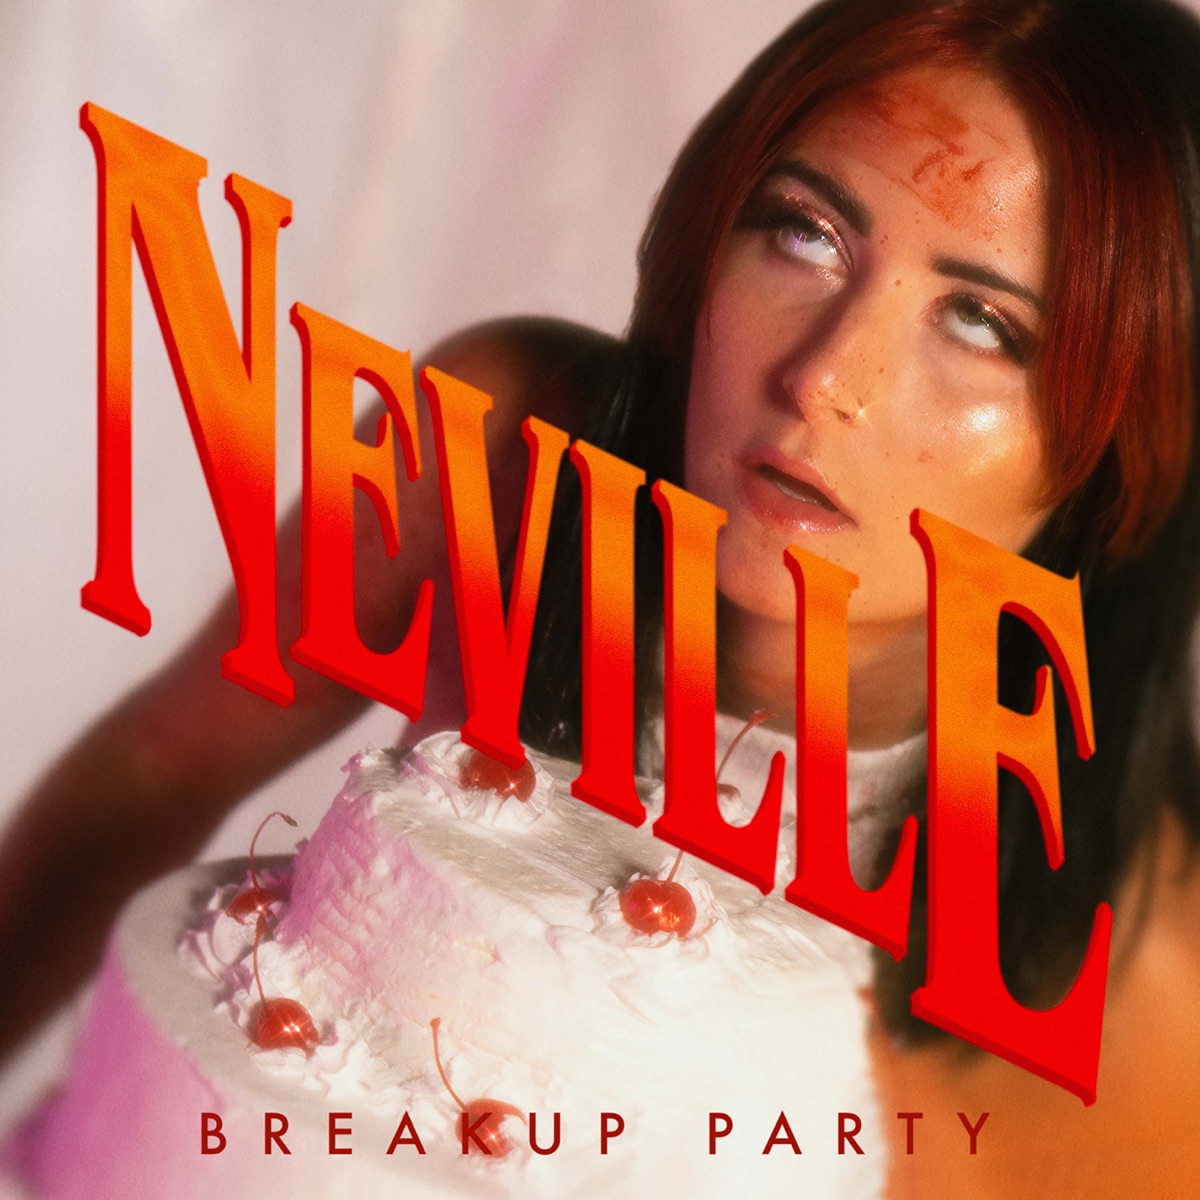 Breakup Party - Single - Album by Neville - Apple Music